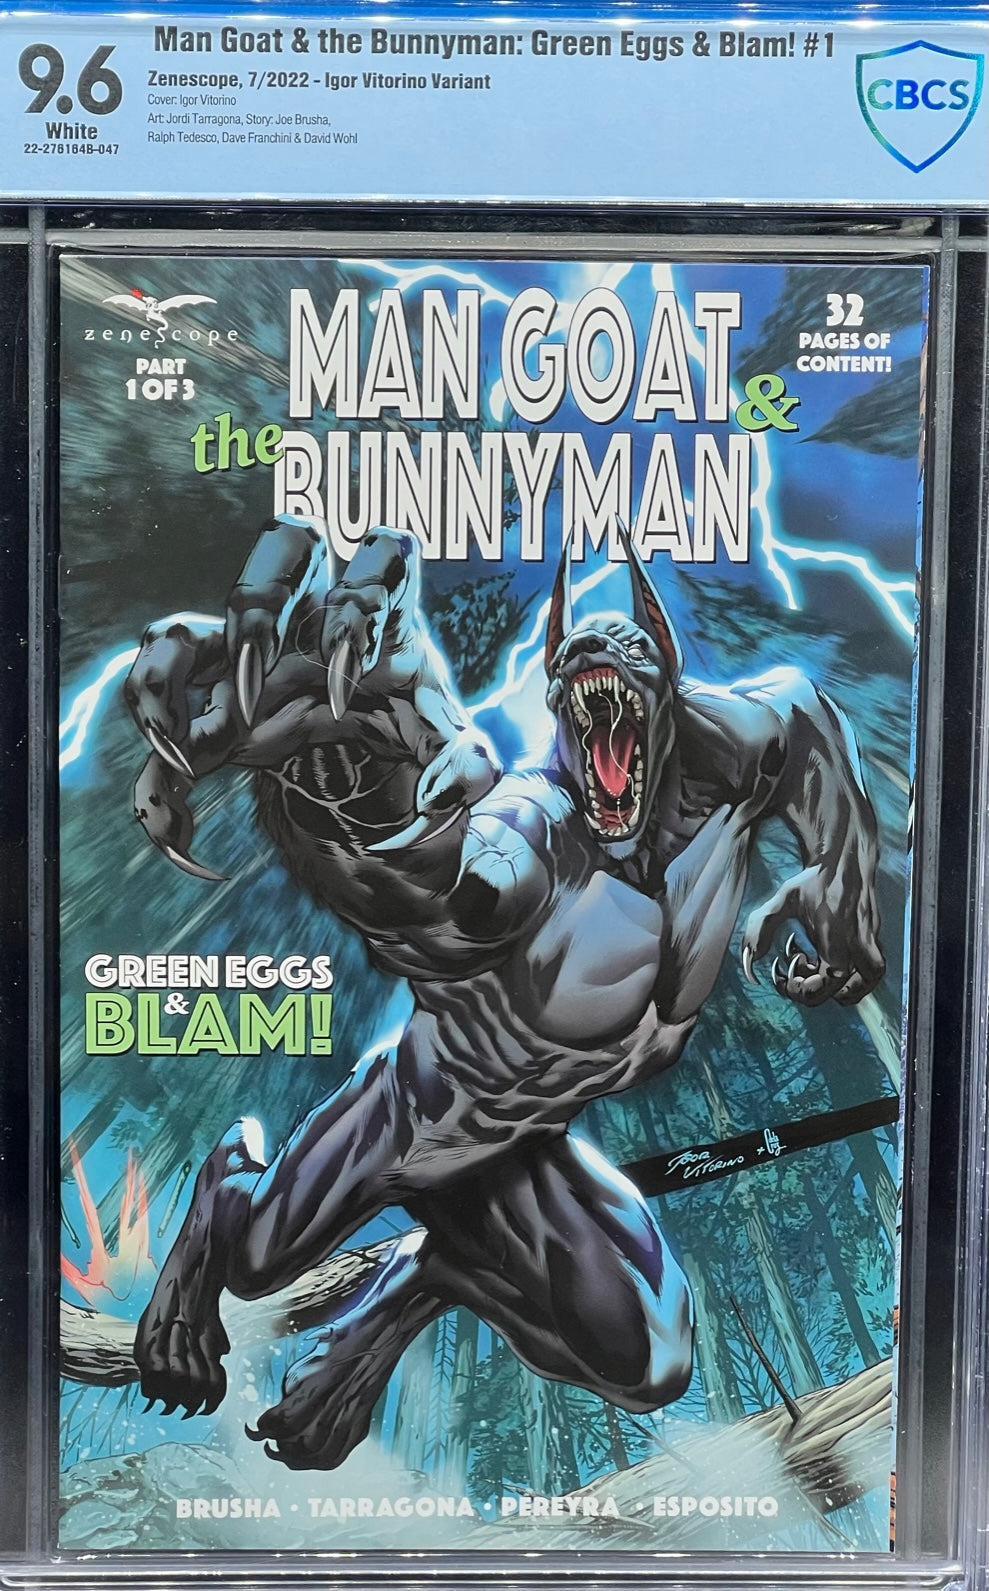 Man Goat & the Bunnyman: Green Eggs & Blam! #1 Igor Vitorino Variant CBCS 9.6 Blue Label